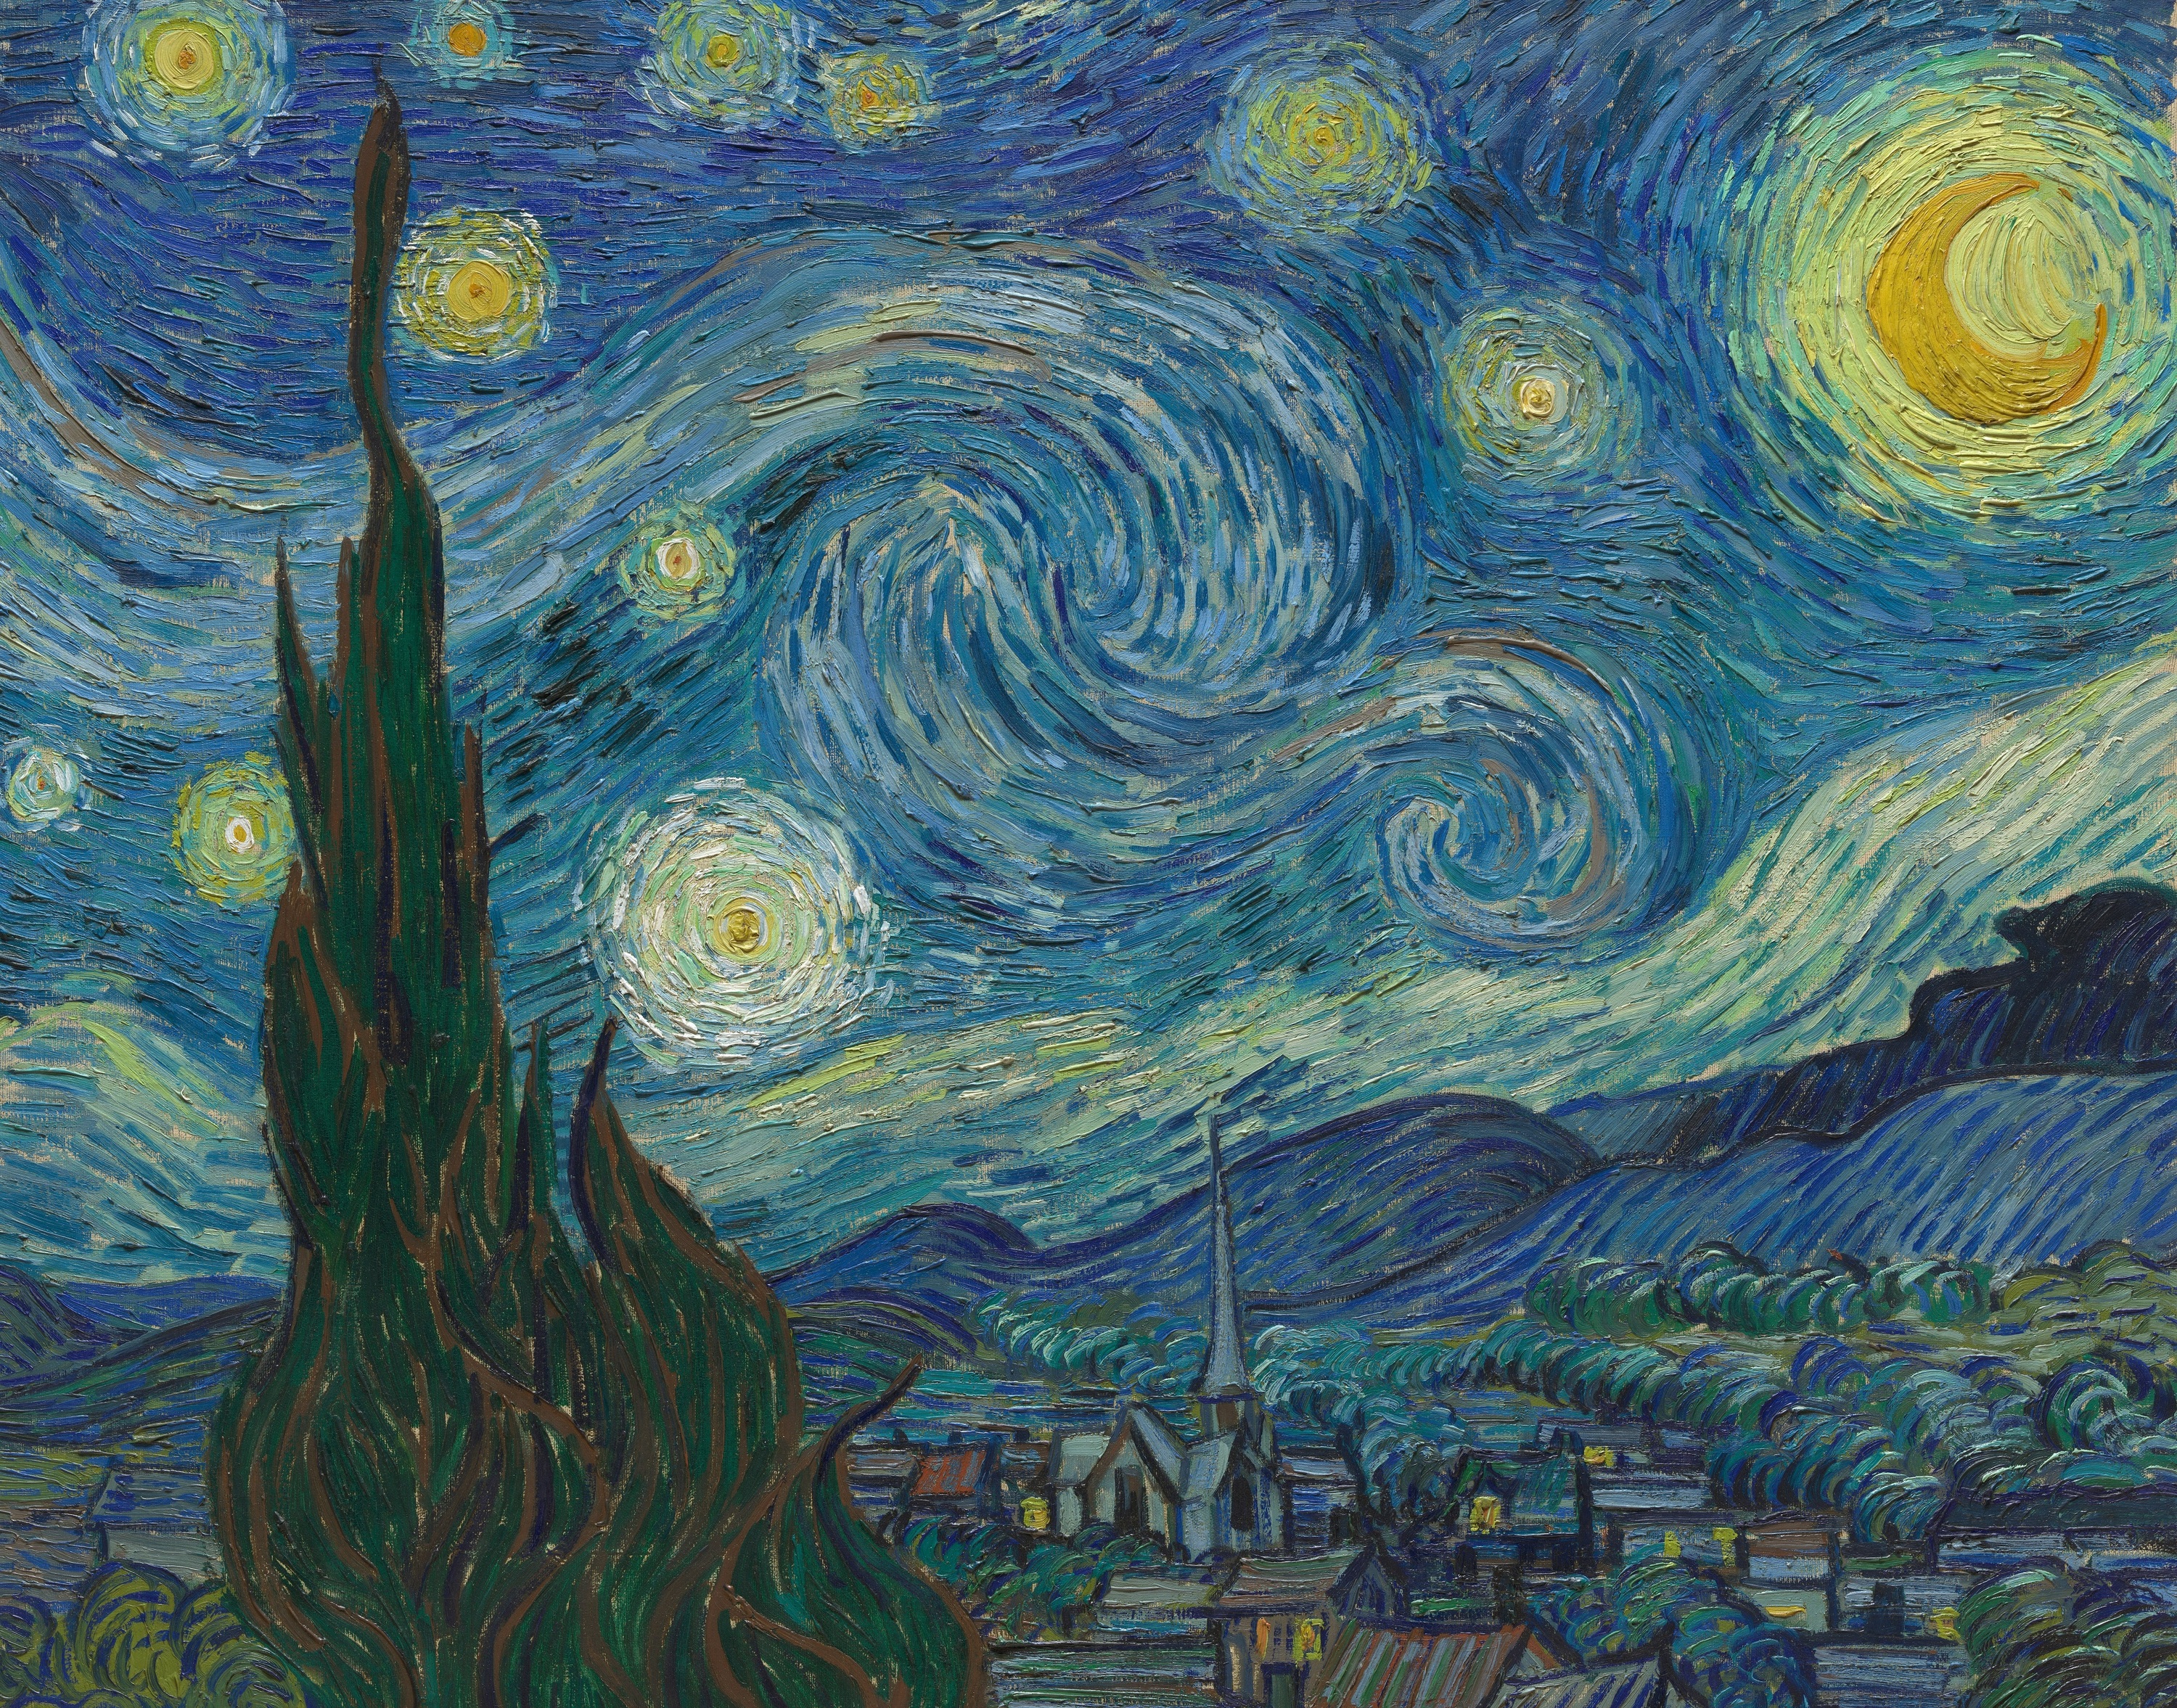 The Starry Night in Van Gogh’s Cypresses at The Met